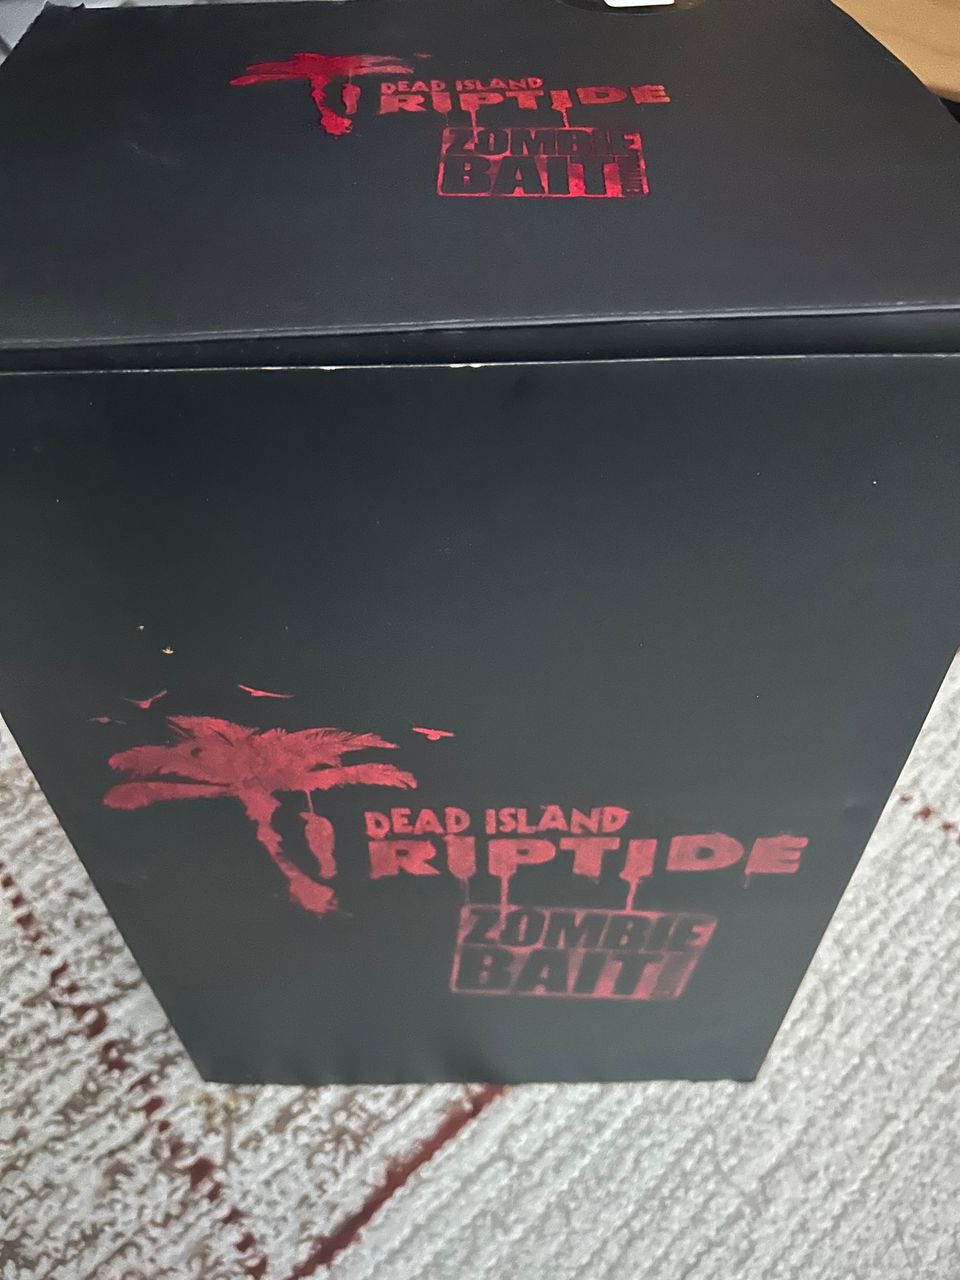 Dead island Riptide - zombie bait edition